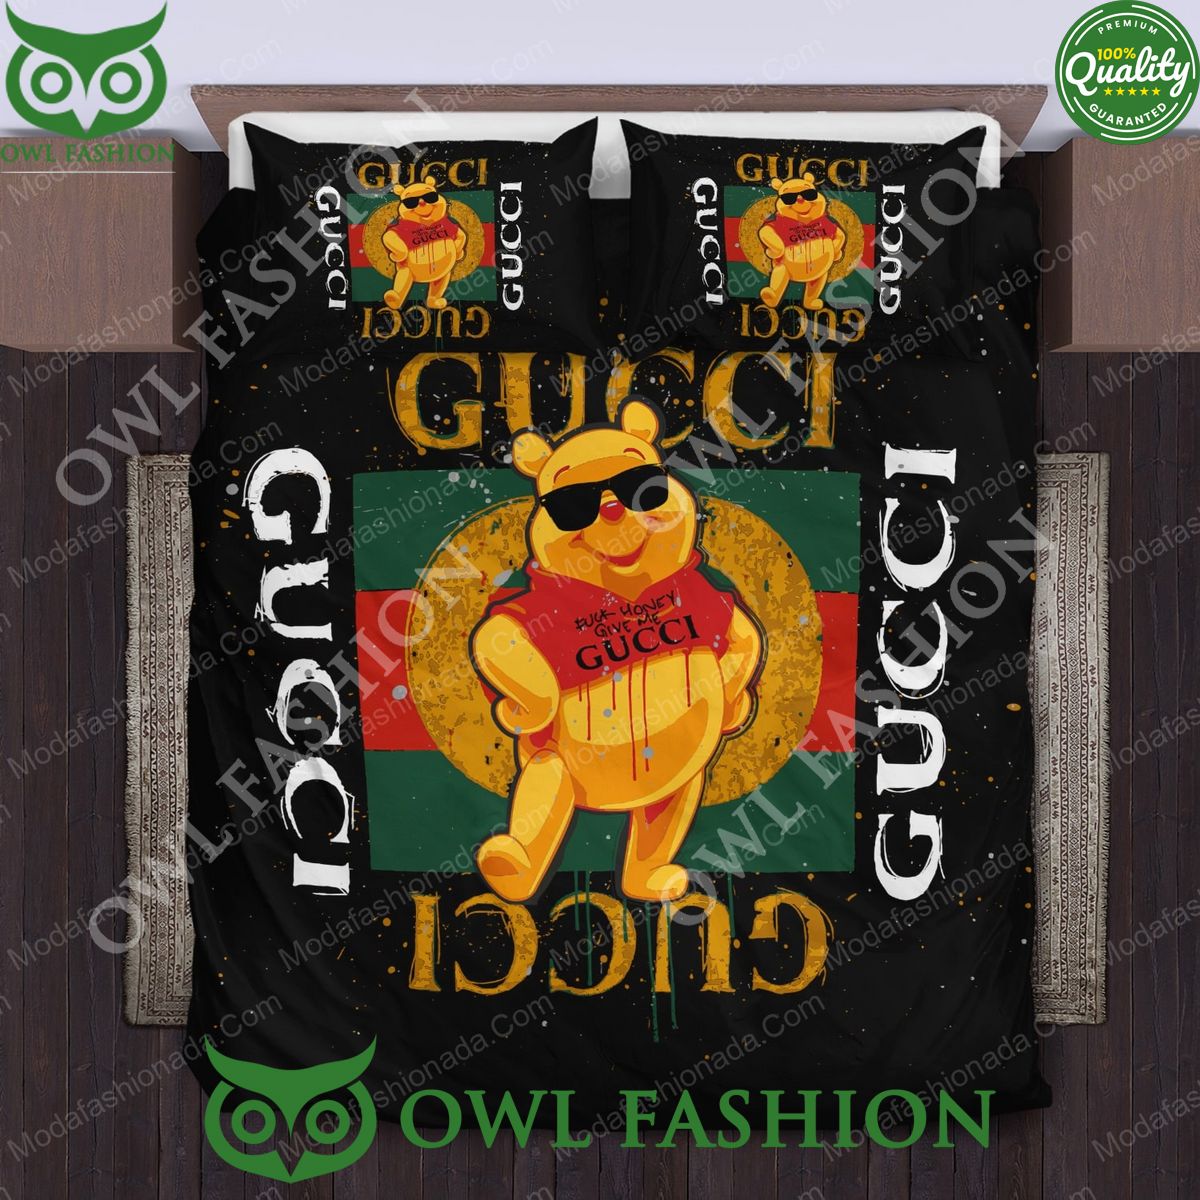 pooh honey bear gucci logo bedding sets 1 2uLrQ.jpg